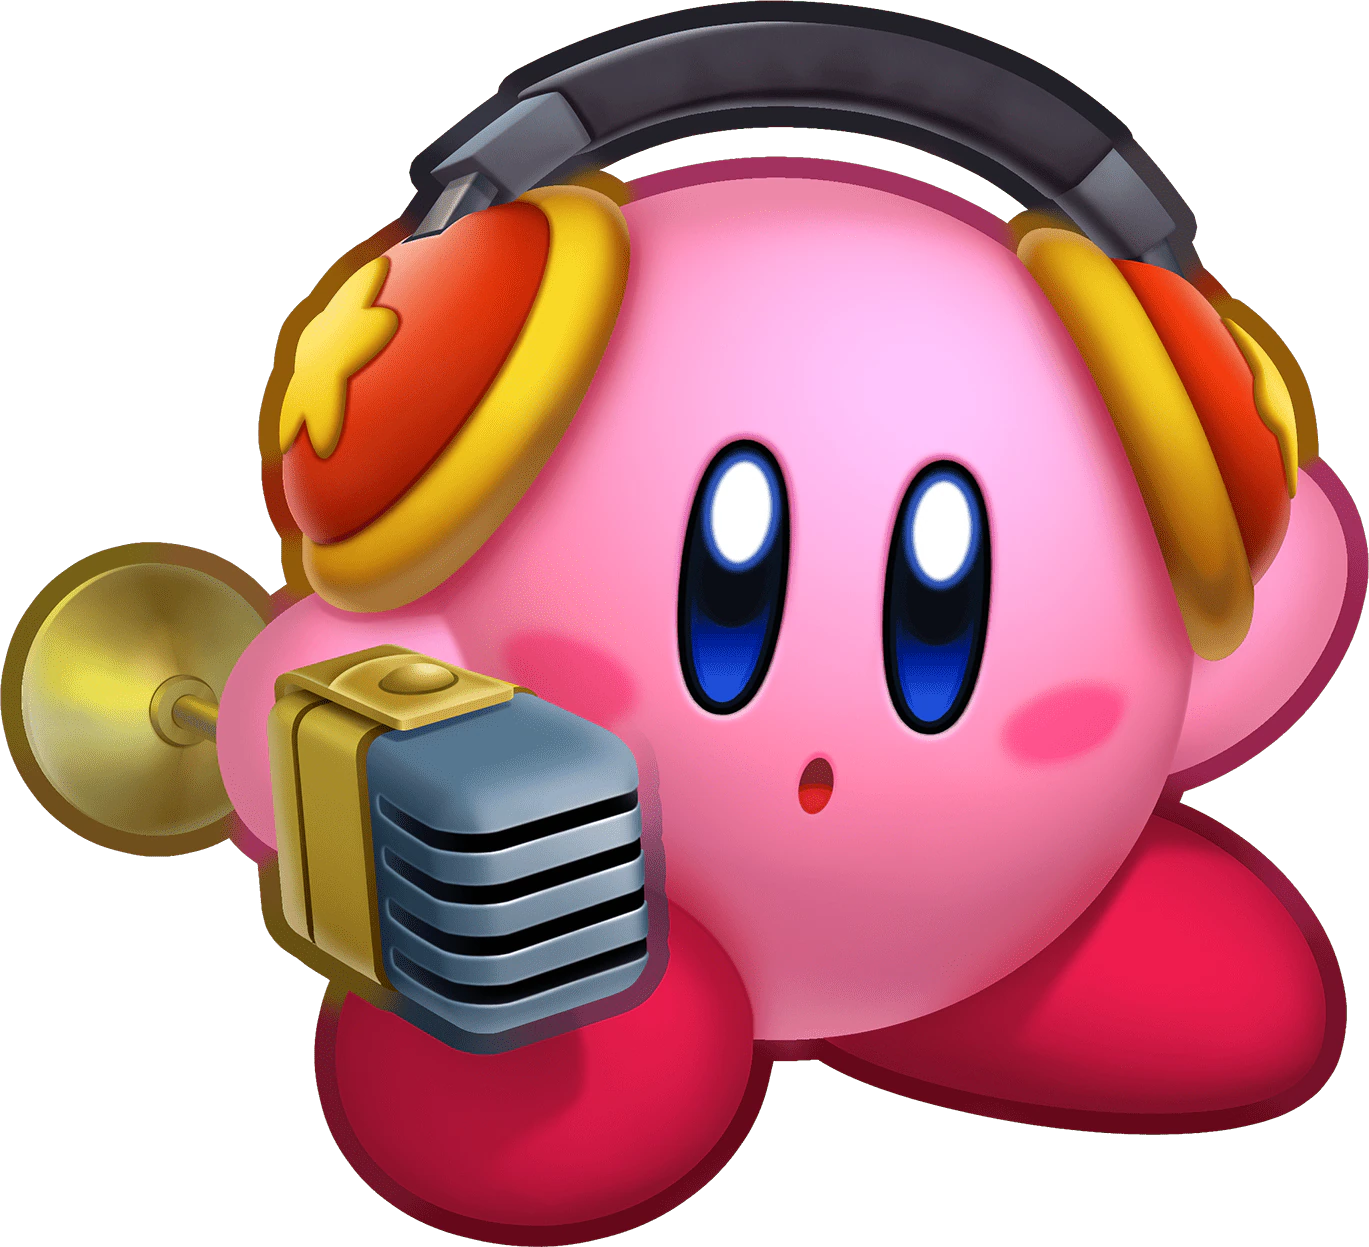 Kirby's Adventure (soundtrack) - WiKirby: it's a wiki, about Kirby!